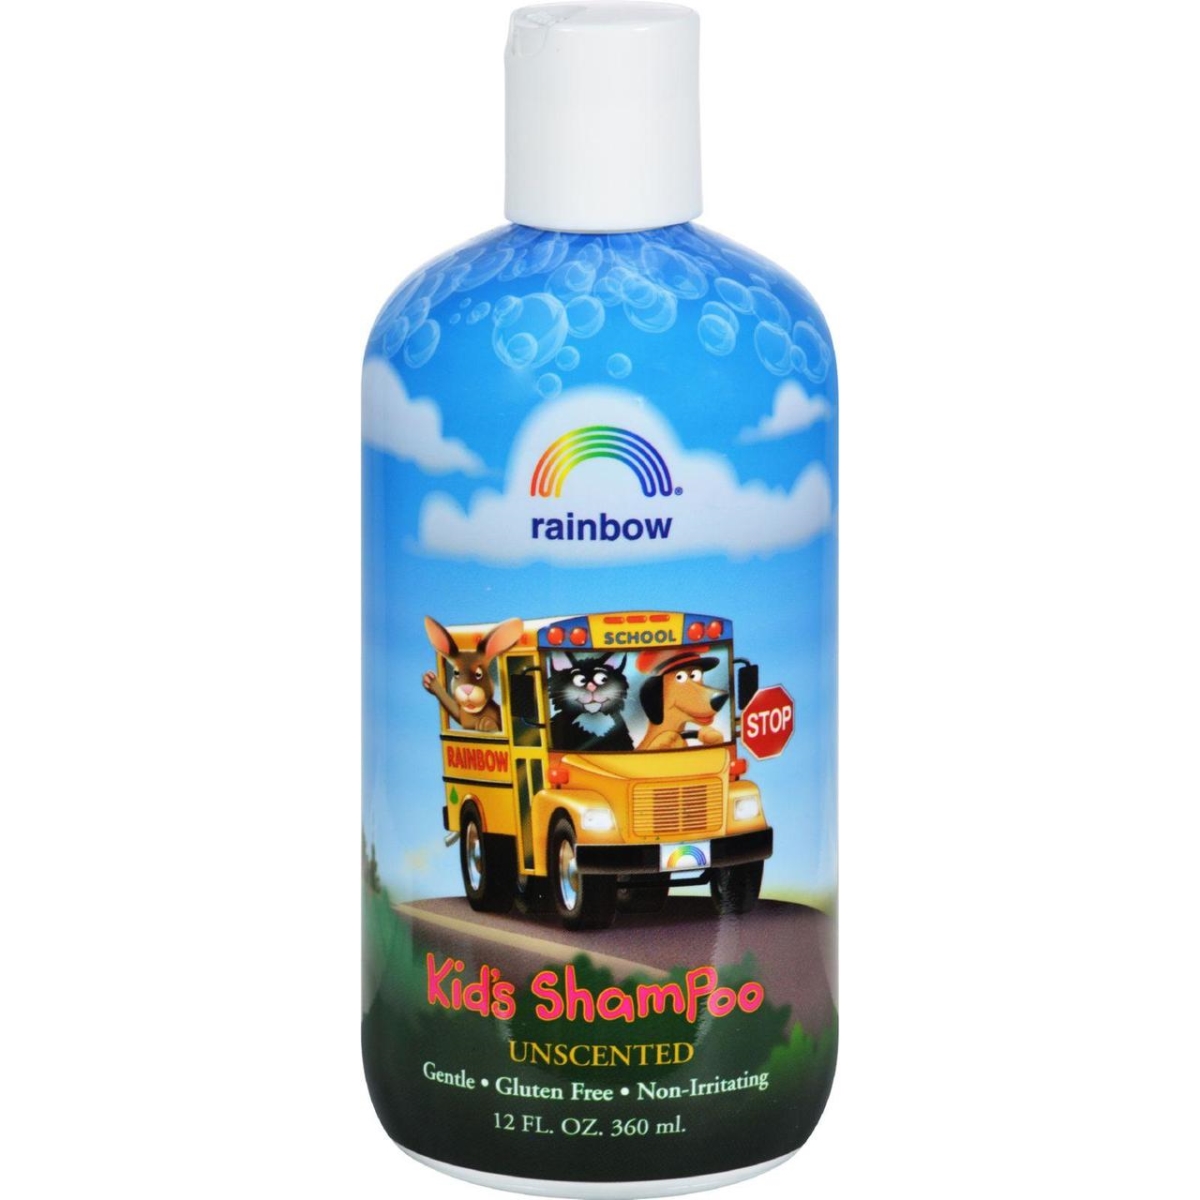 Hg0562827 12 Fl Oz Organic Herbal Shampoo For Kids - Unscented